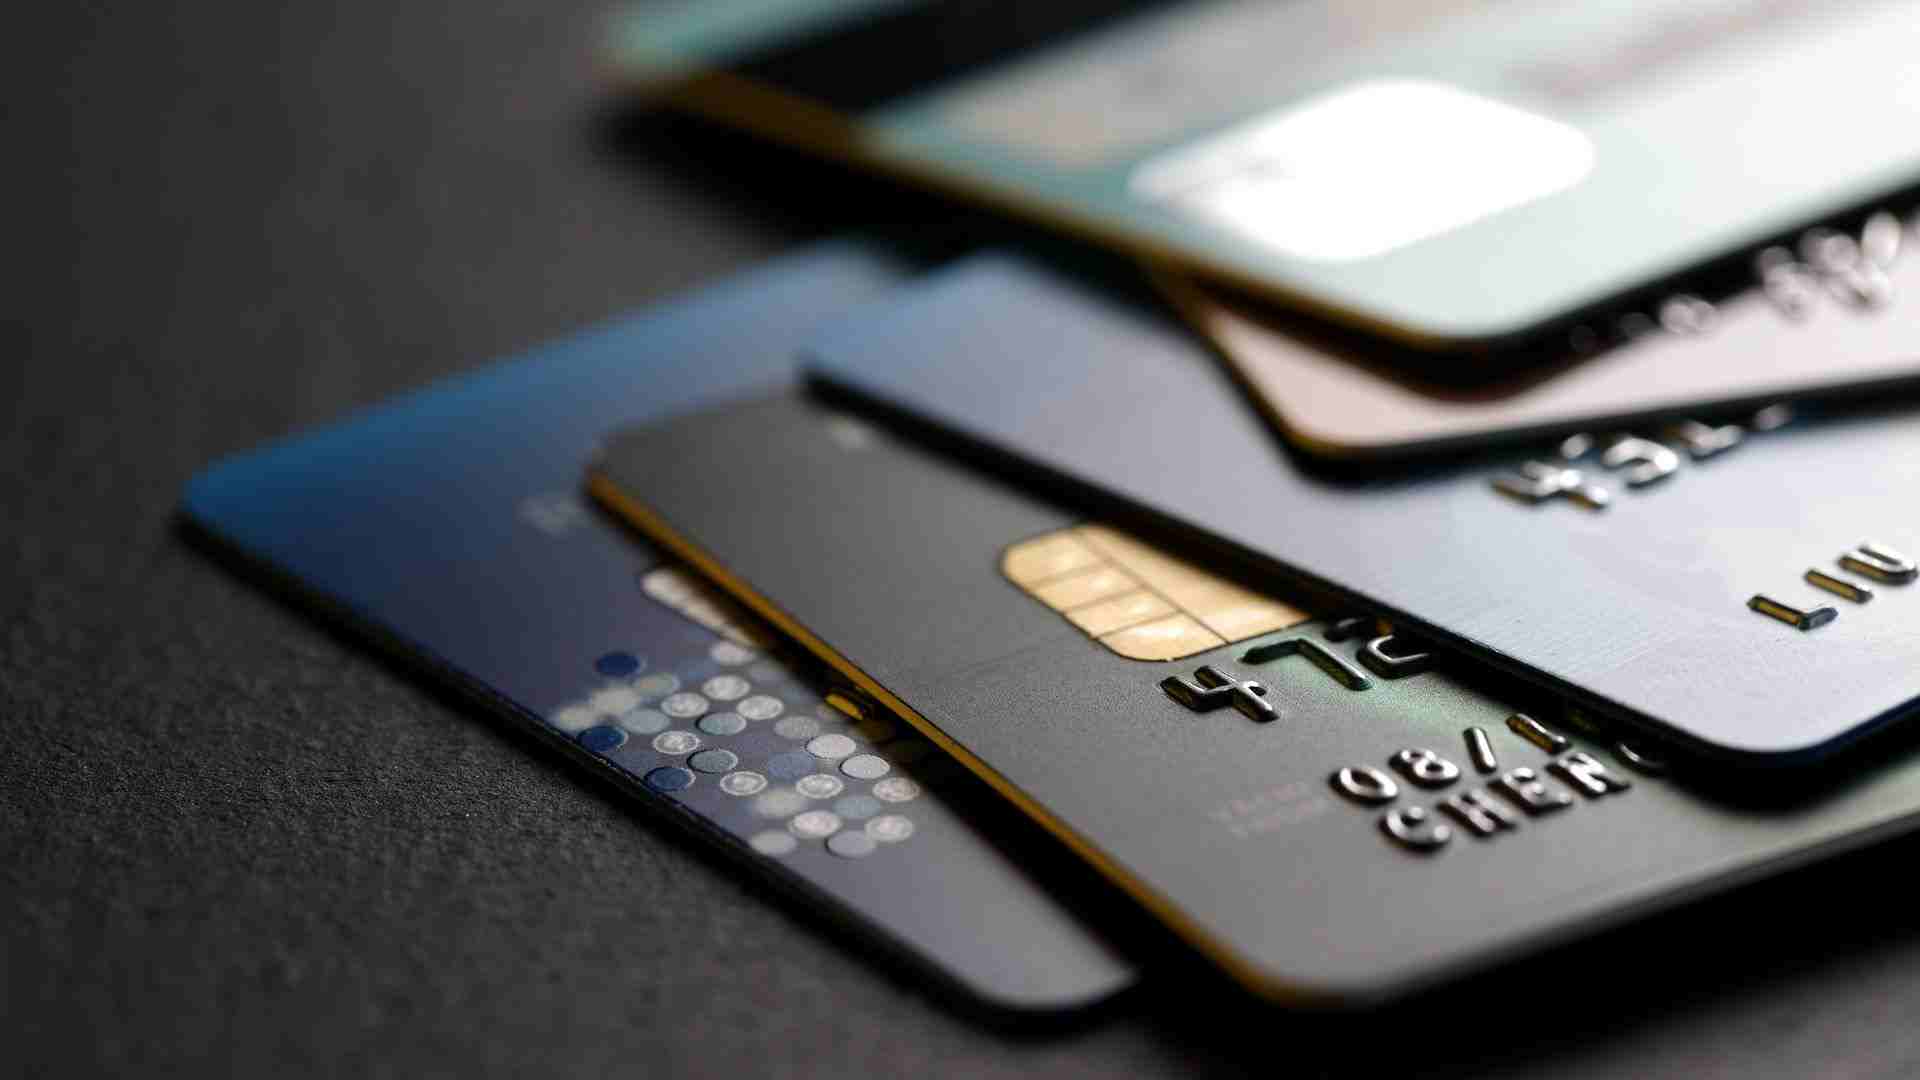 Plingtosponic Credit Card Scam Protection Tips